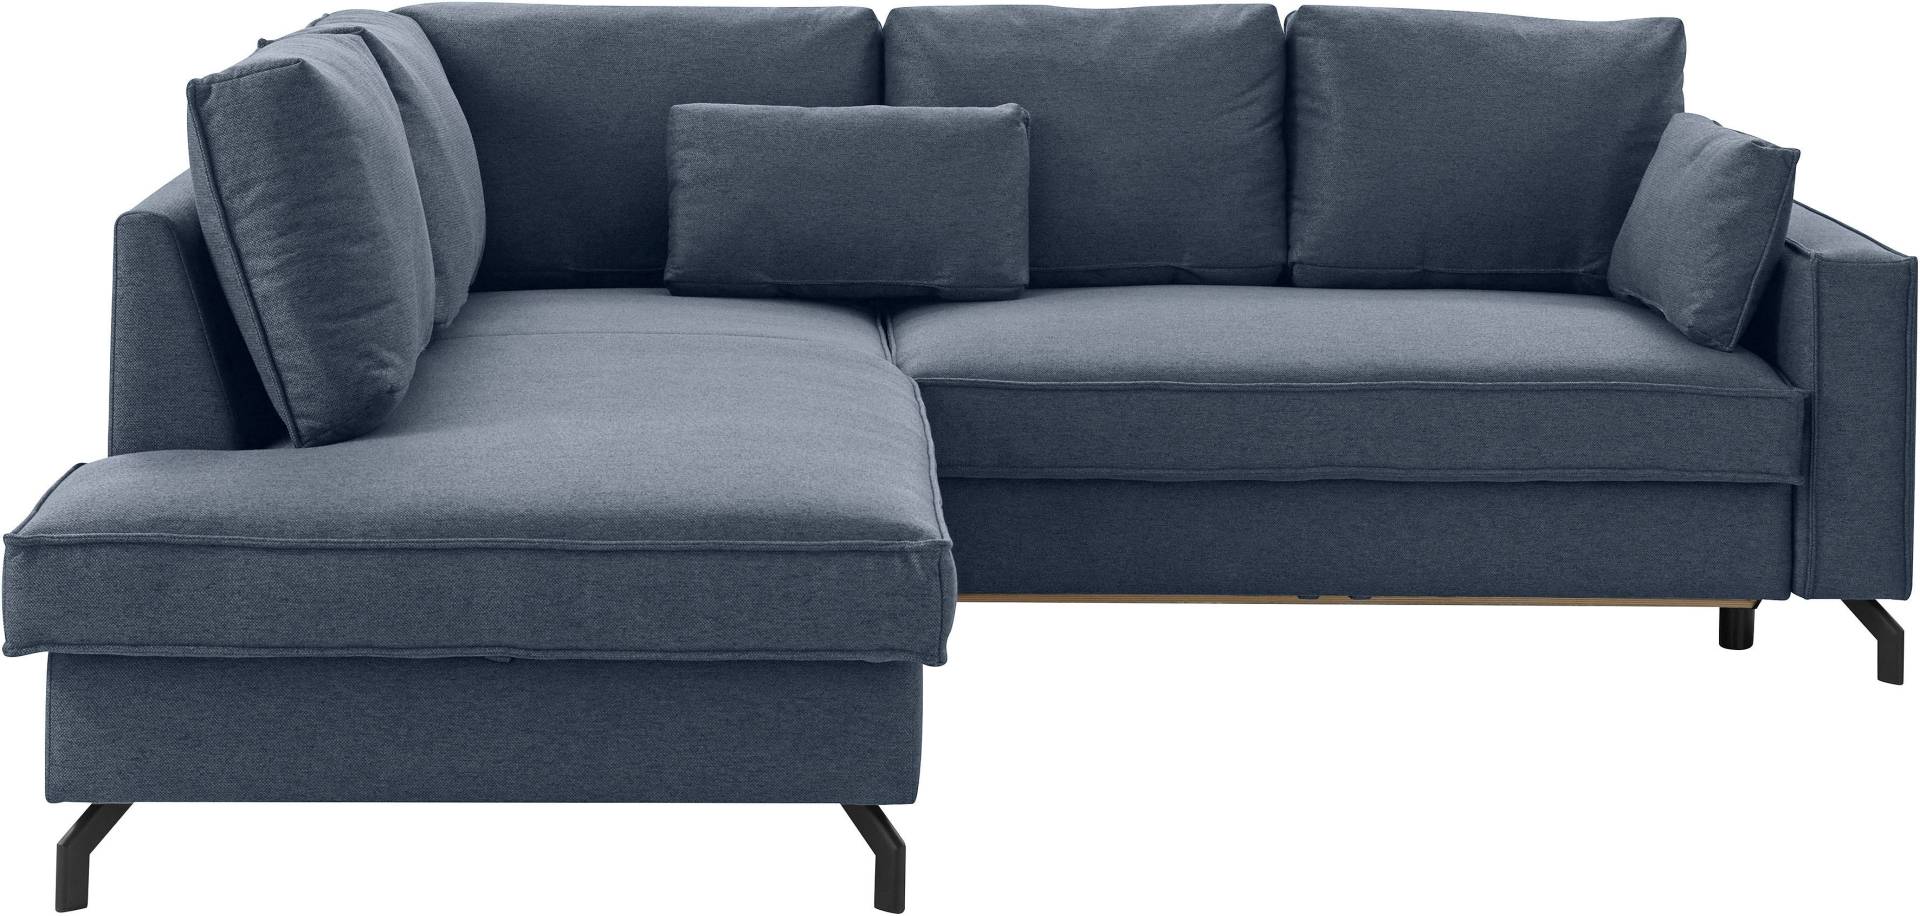 exxpo - sofa fashion Ecksofa »Daytona, L-Form«, wahlweise mit Bettfunktion und Bettkasten von exxpo - sofa fashion